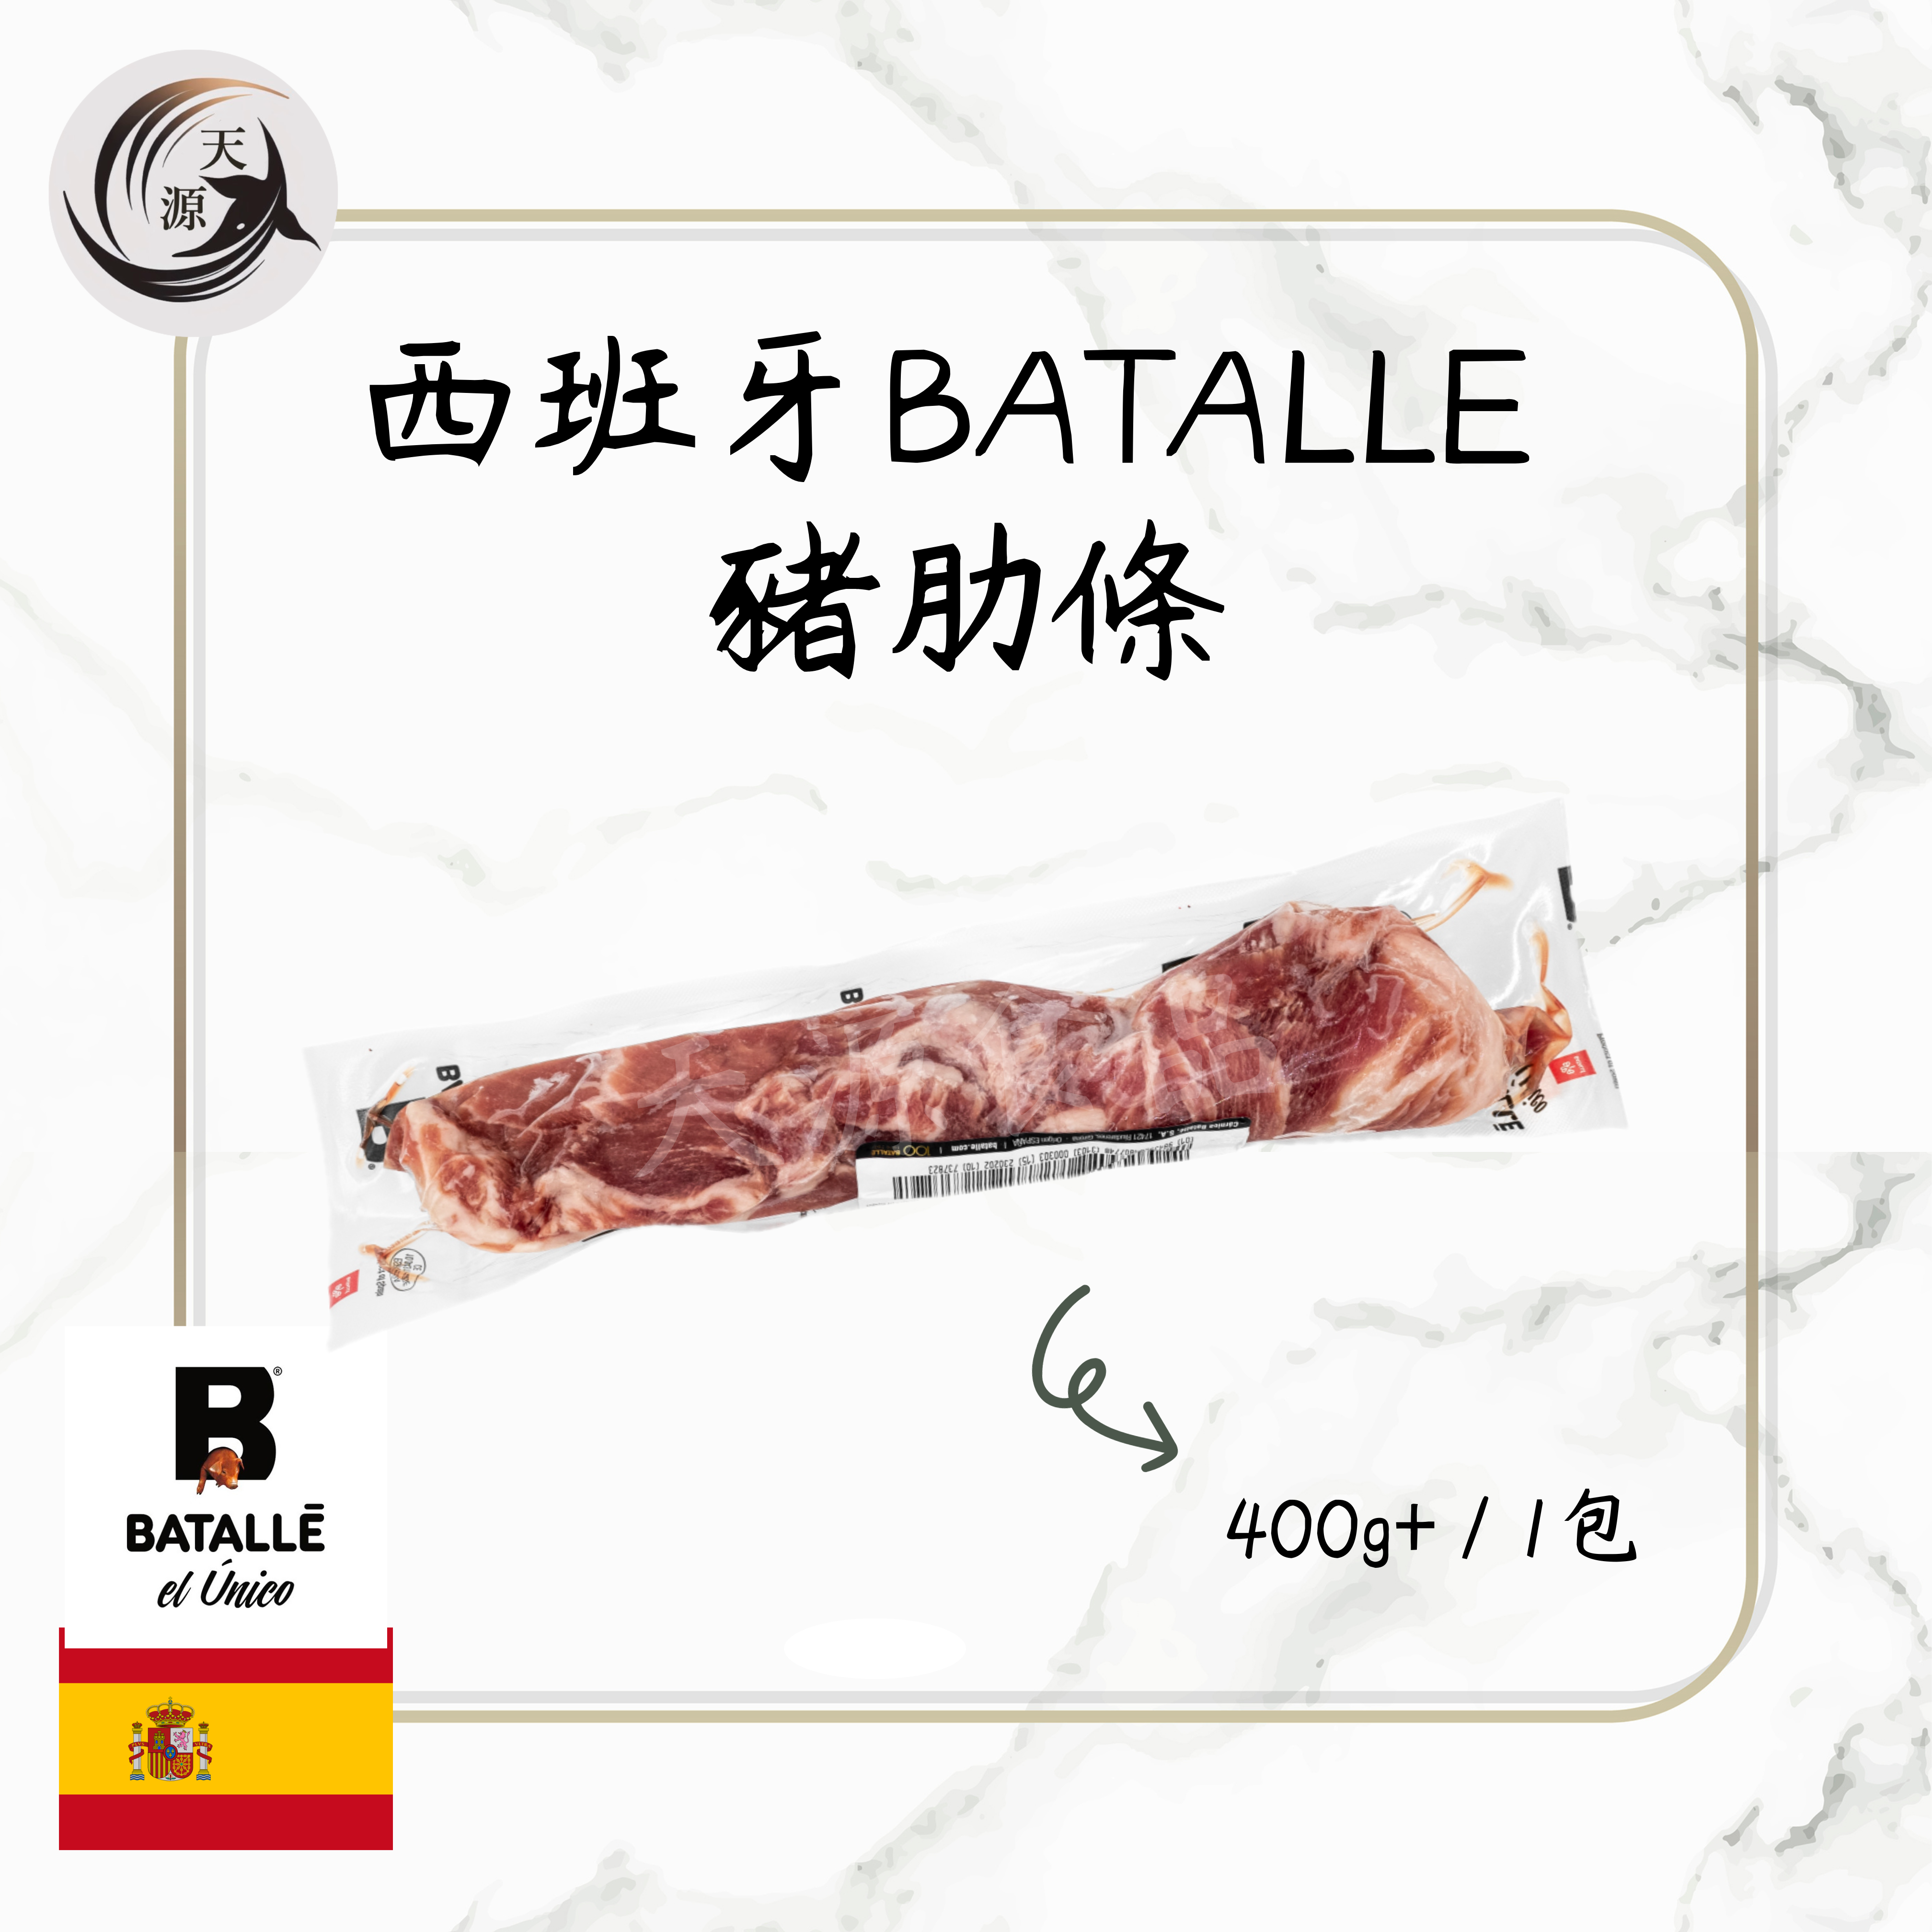 Spanish BATALLE Pork Ribs